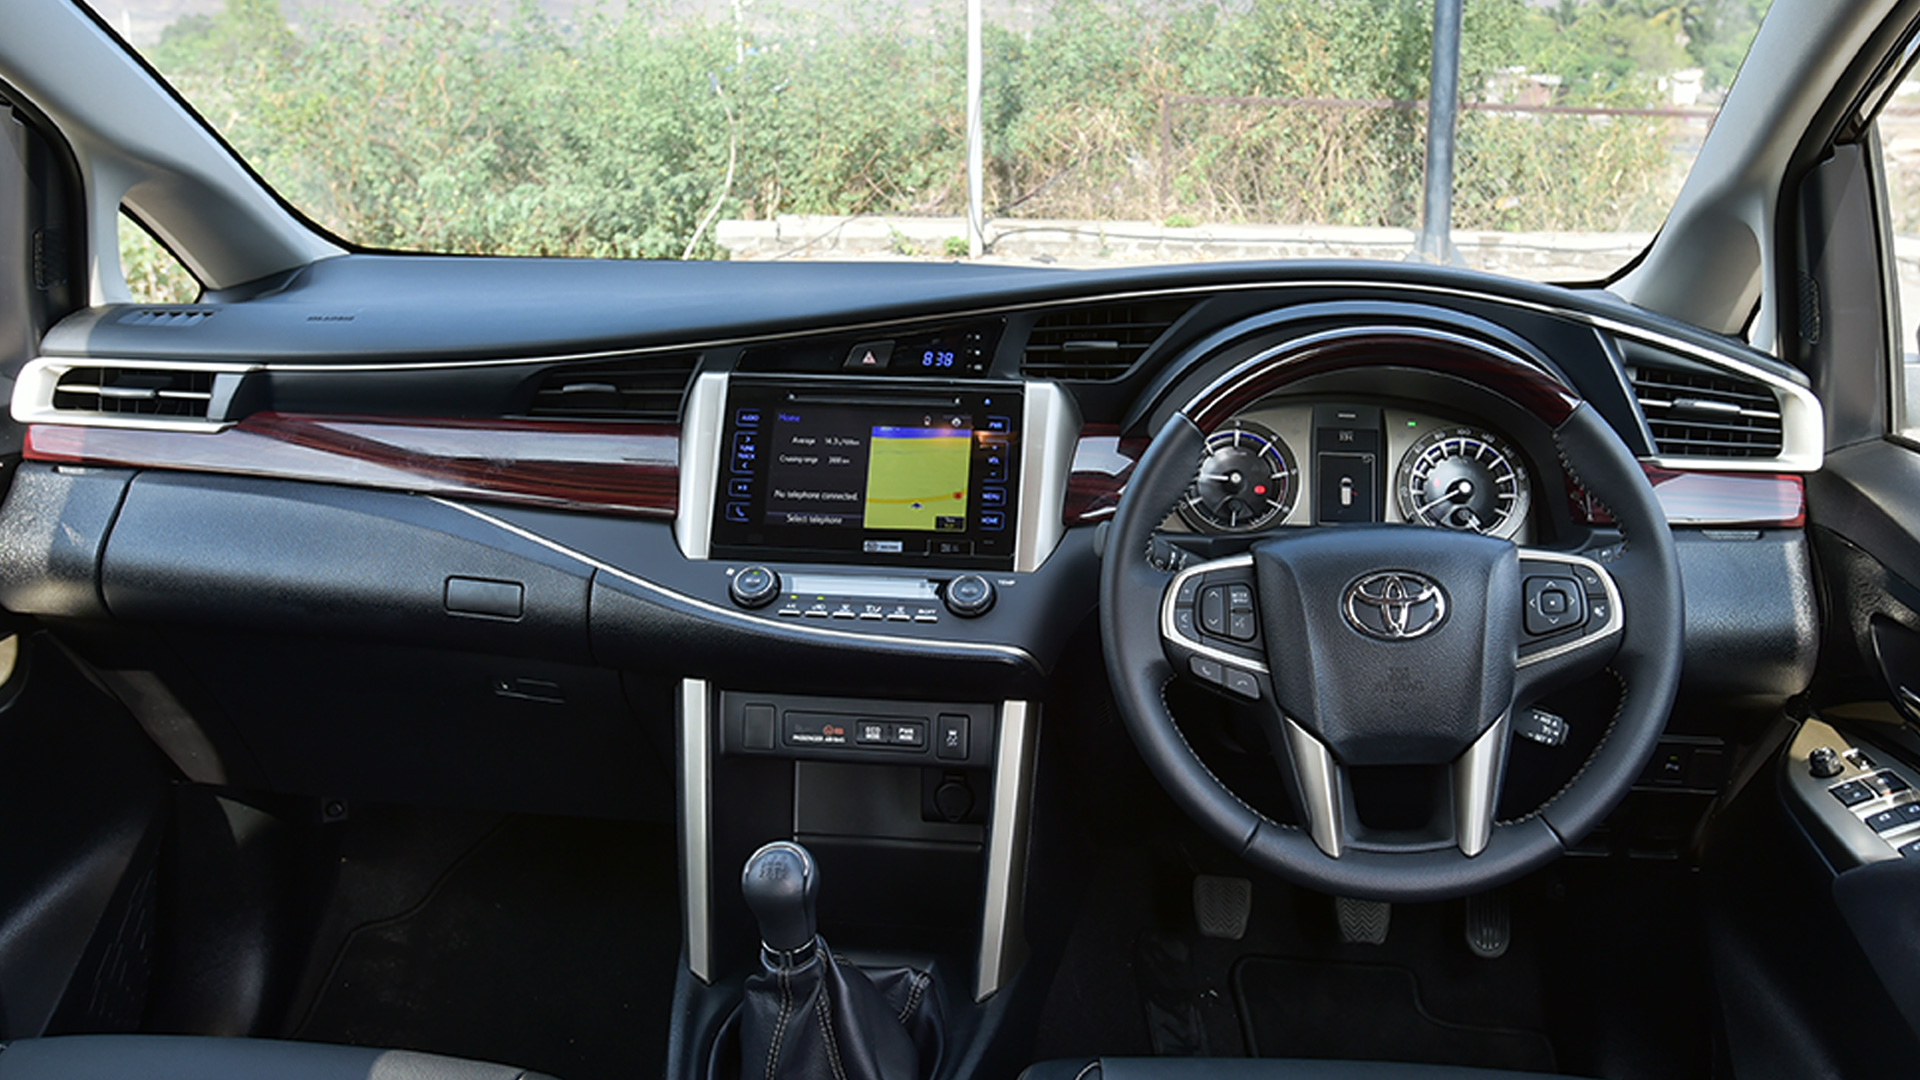 Toyota Innova Crysta 2016 Std Interior Car Photos Overdrive